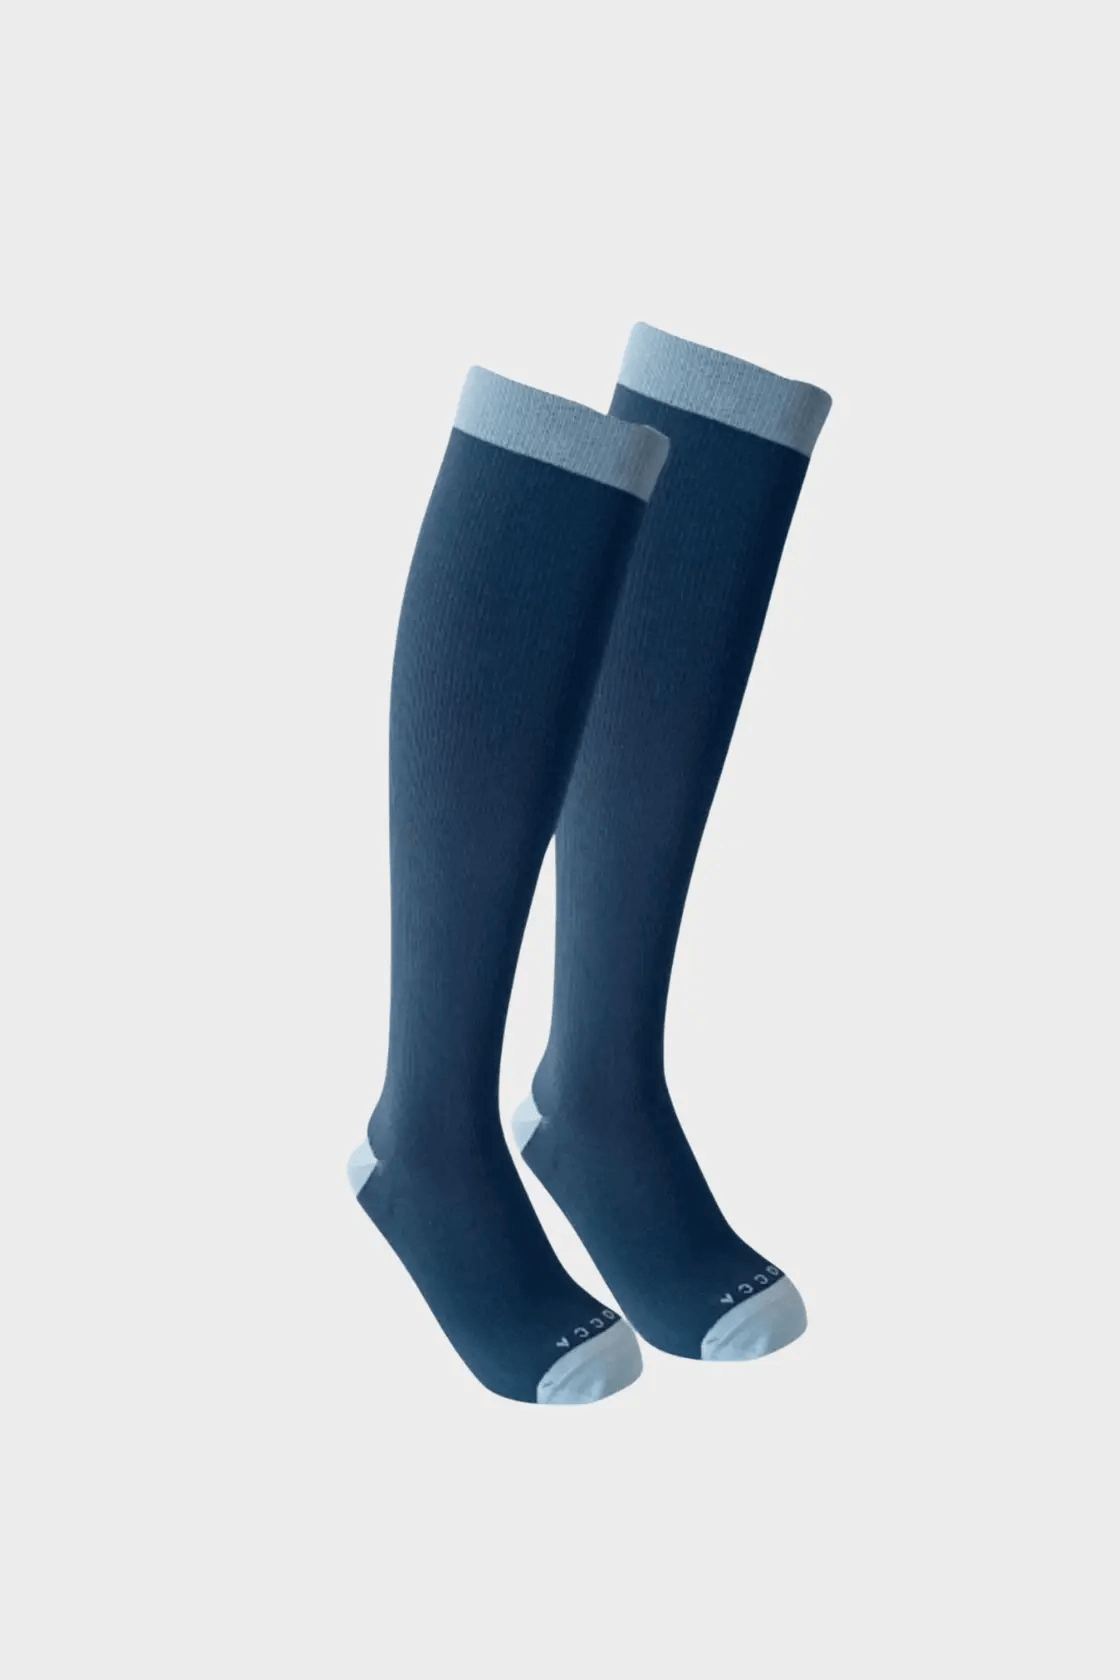 Rocca Sock Knee High Compression Socks